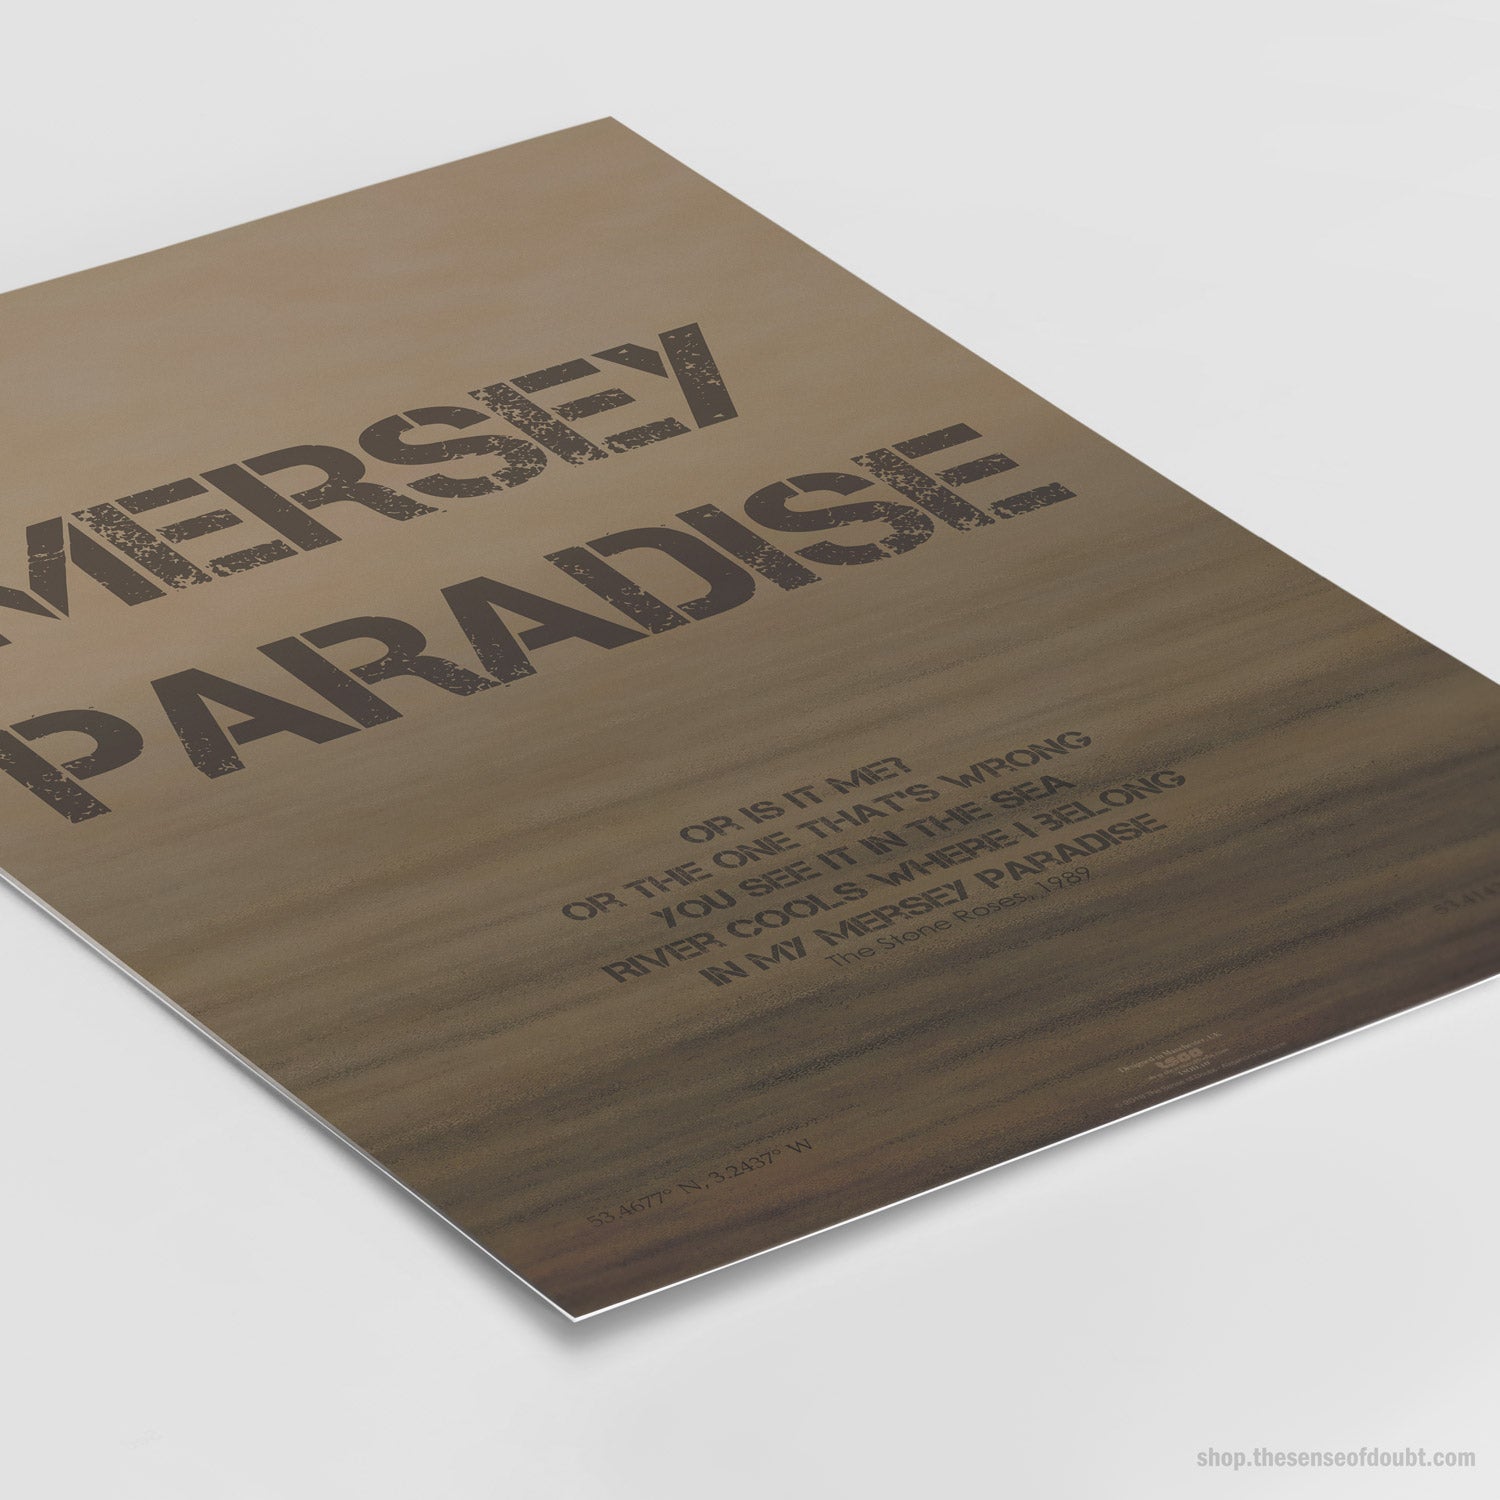 Mersey Paradise - The Sense of Doubt